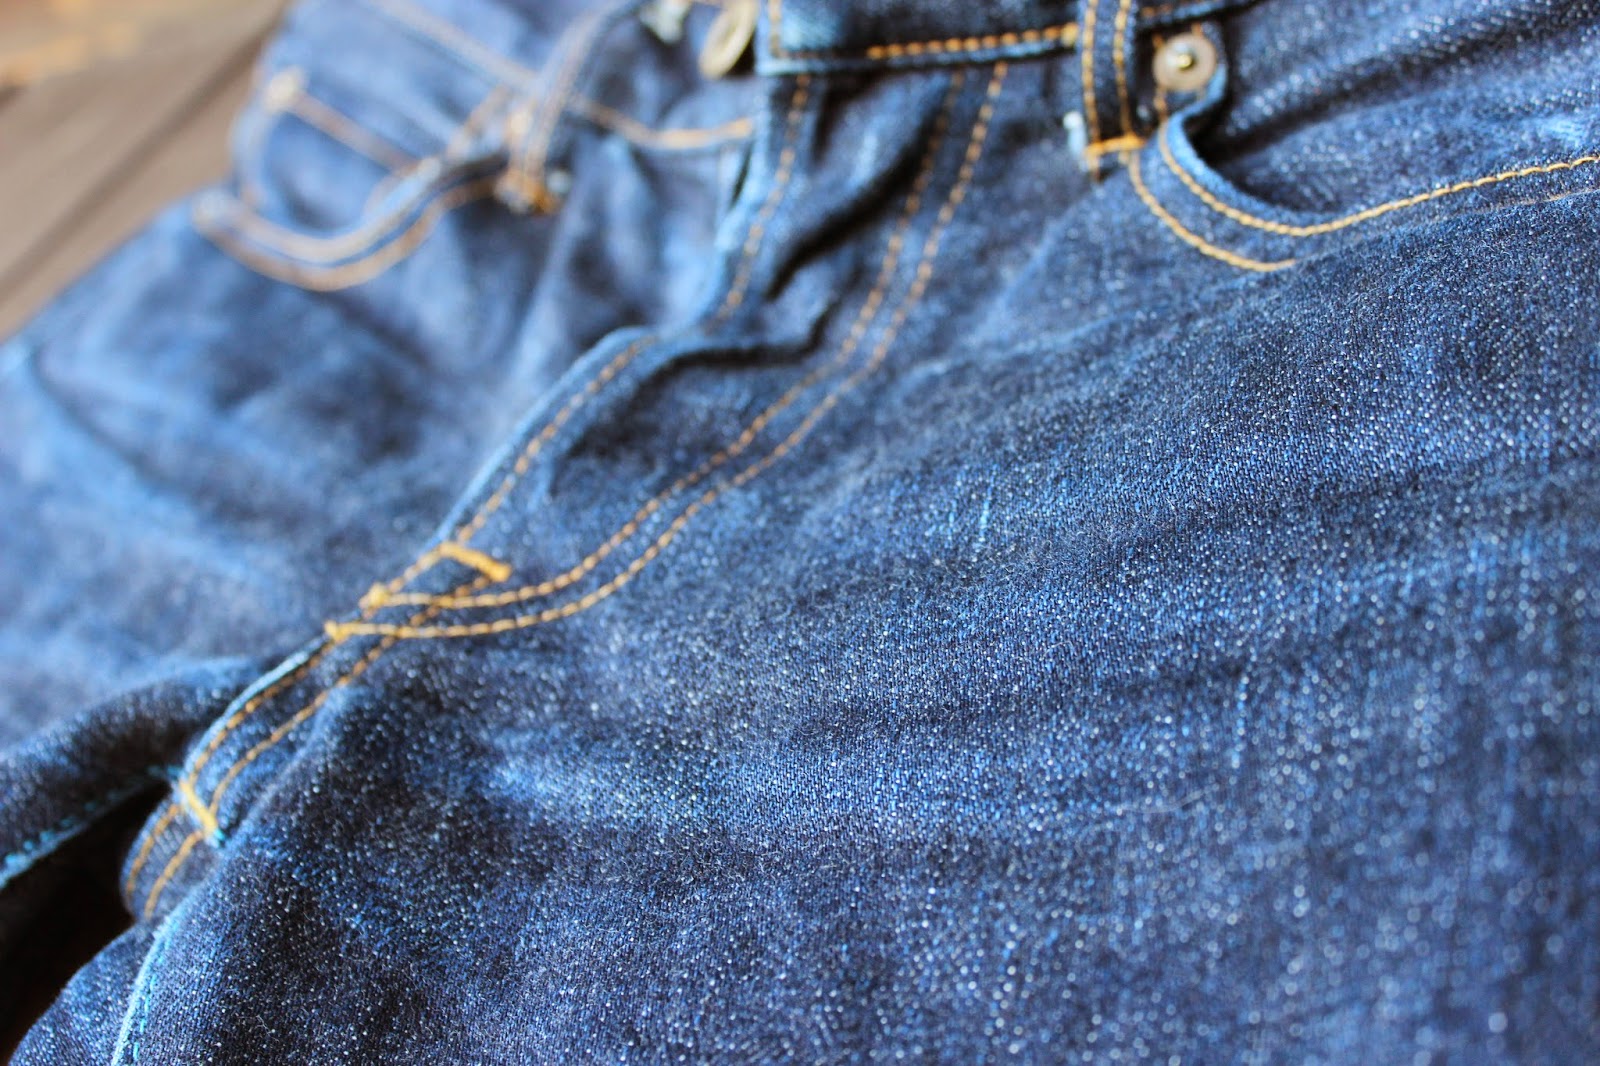 Japan Blue Jeans / ジャパンブルージーンズ: サイズ違いのジーパン穿いて色落ち比べる～1年経過～ Compare the different size jeans